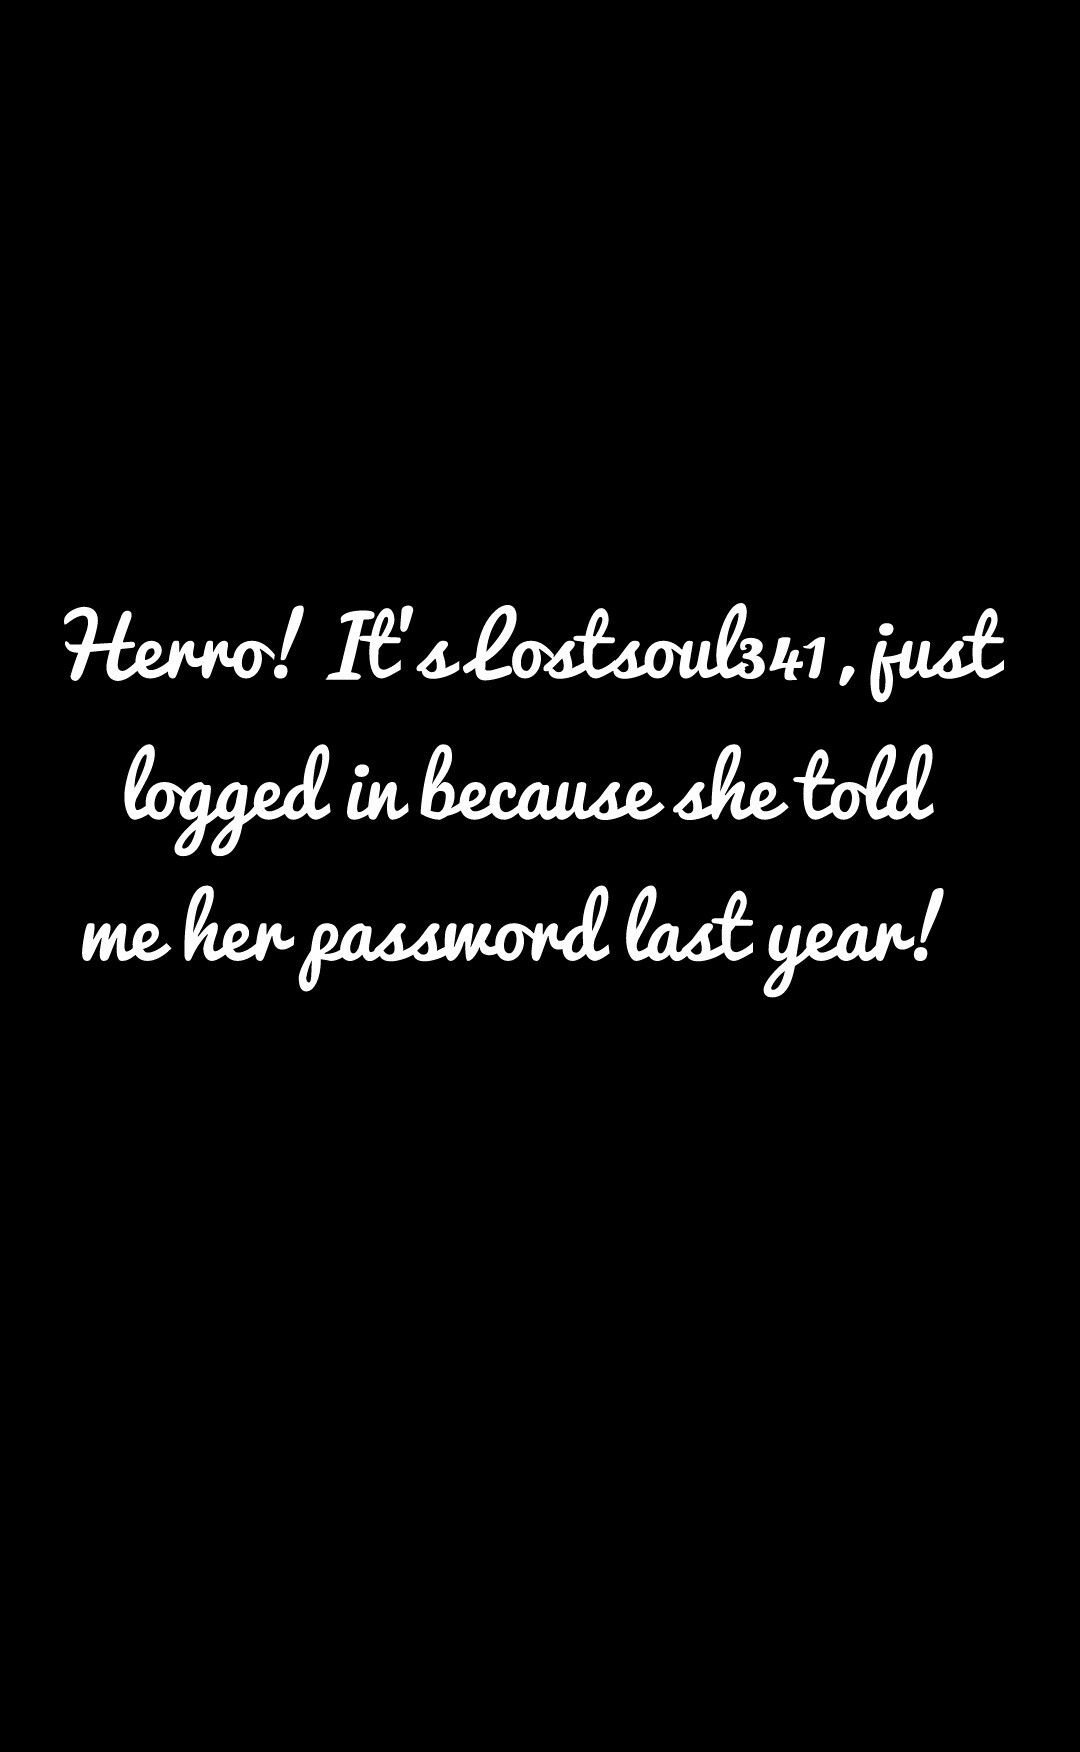 I still remember the password!